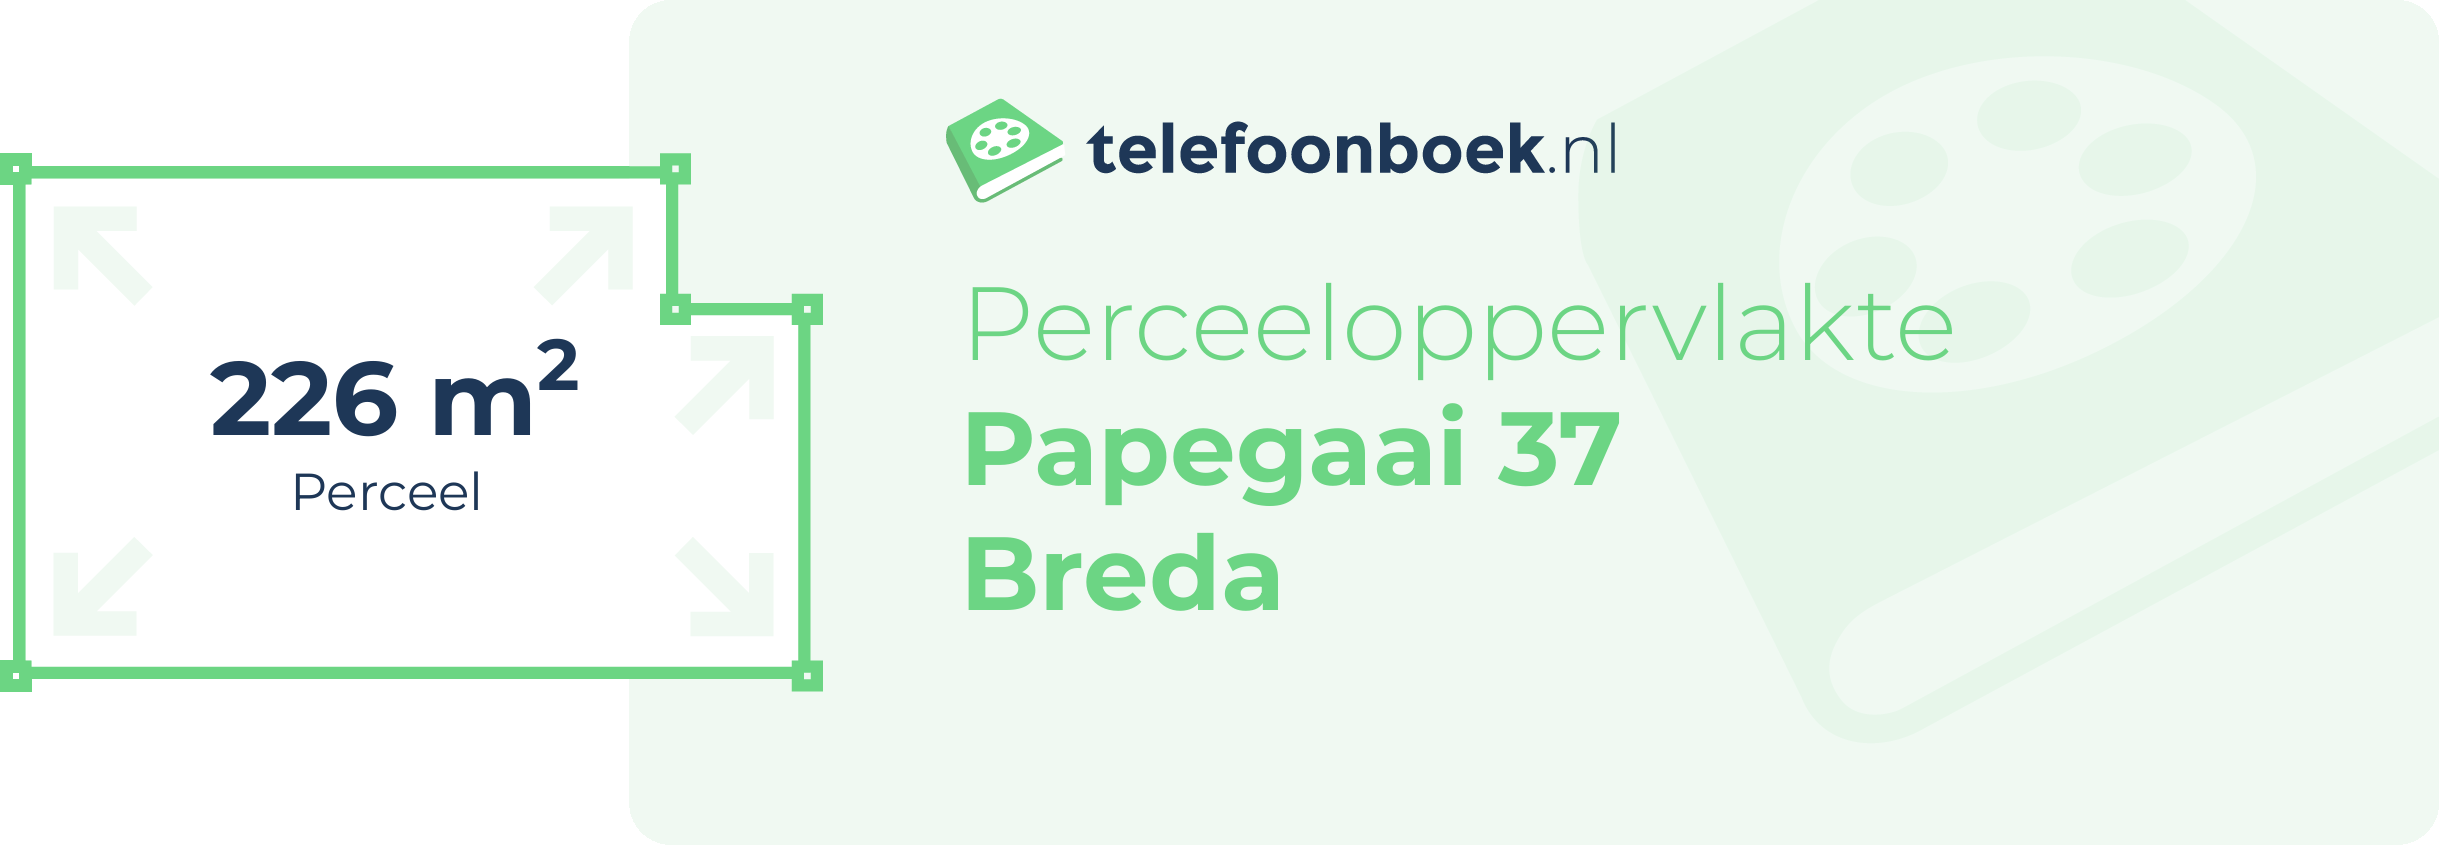 Perceeloppervlakte Papegaai 37 Breda